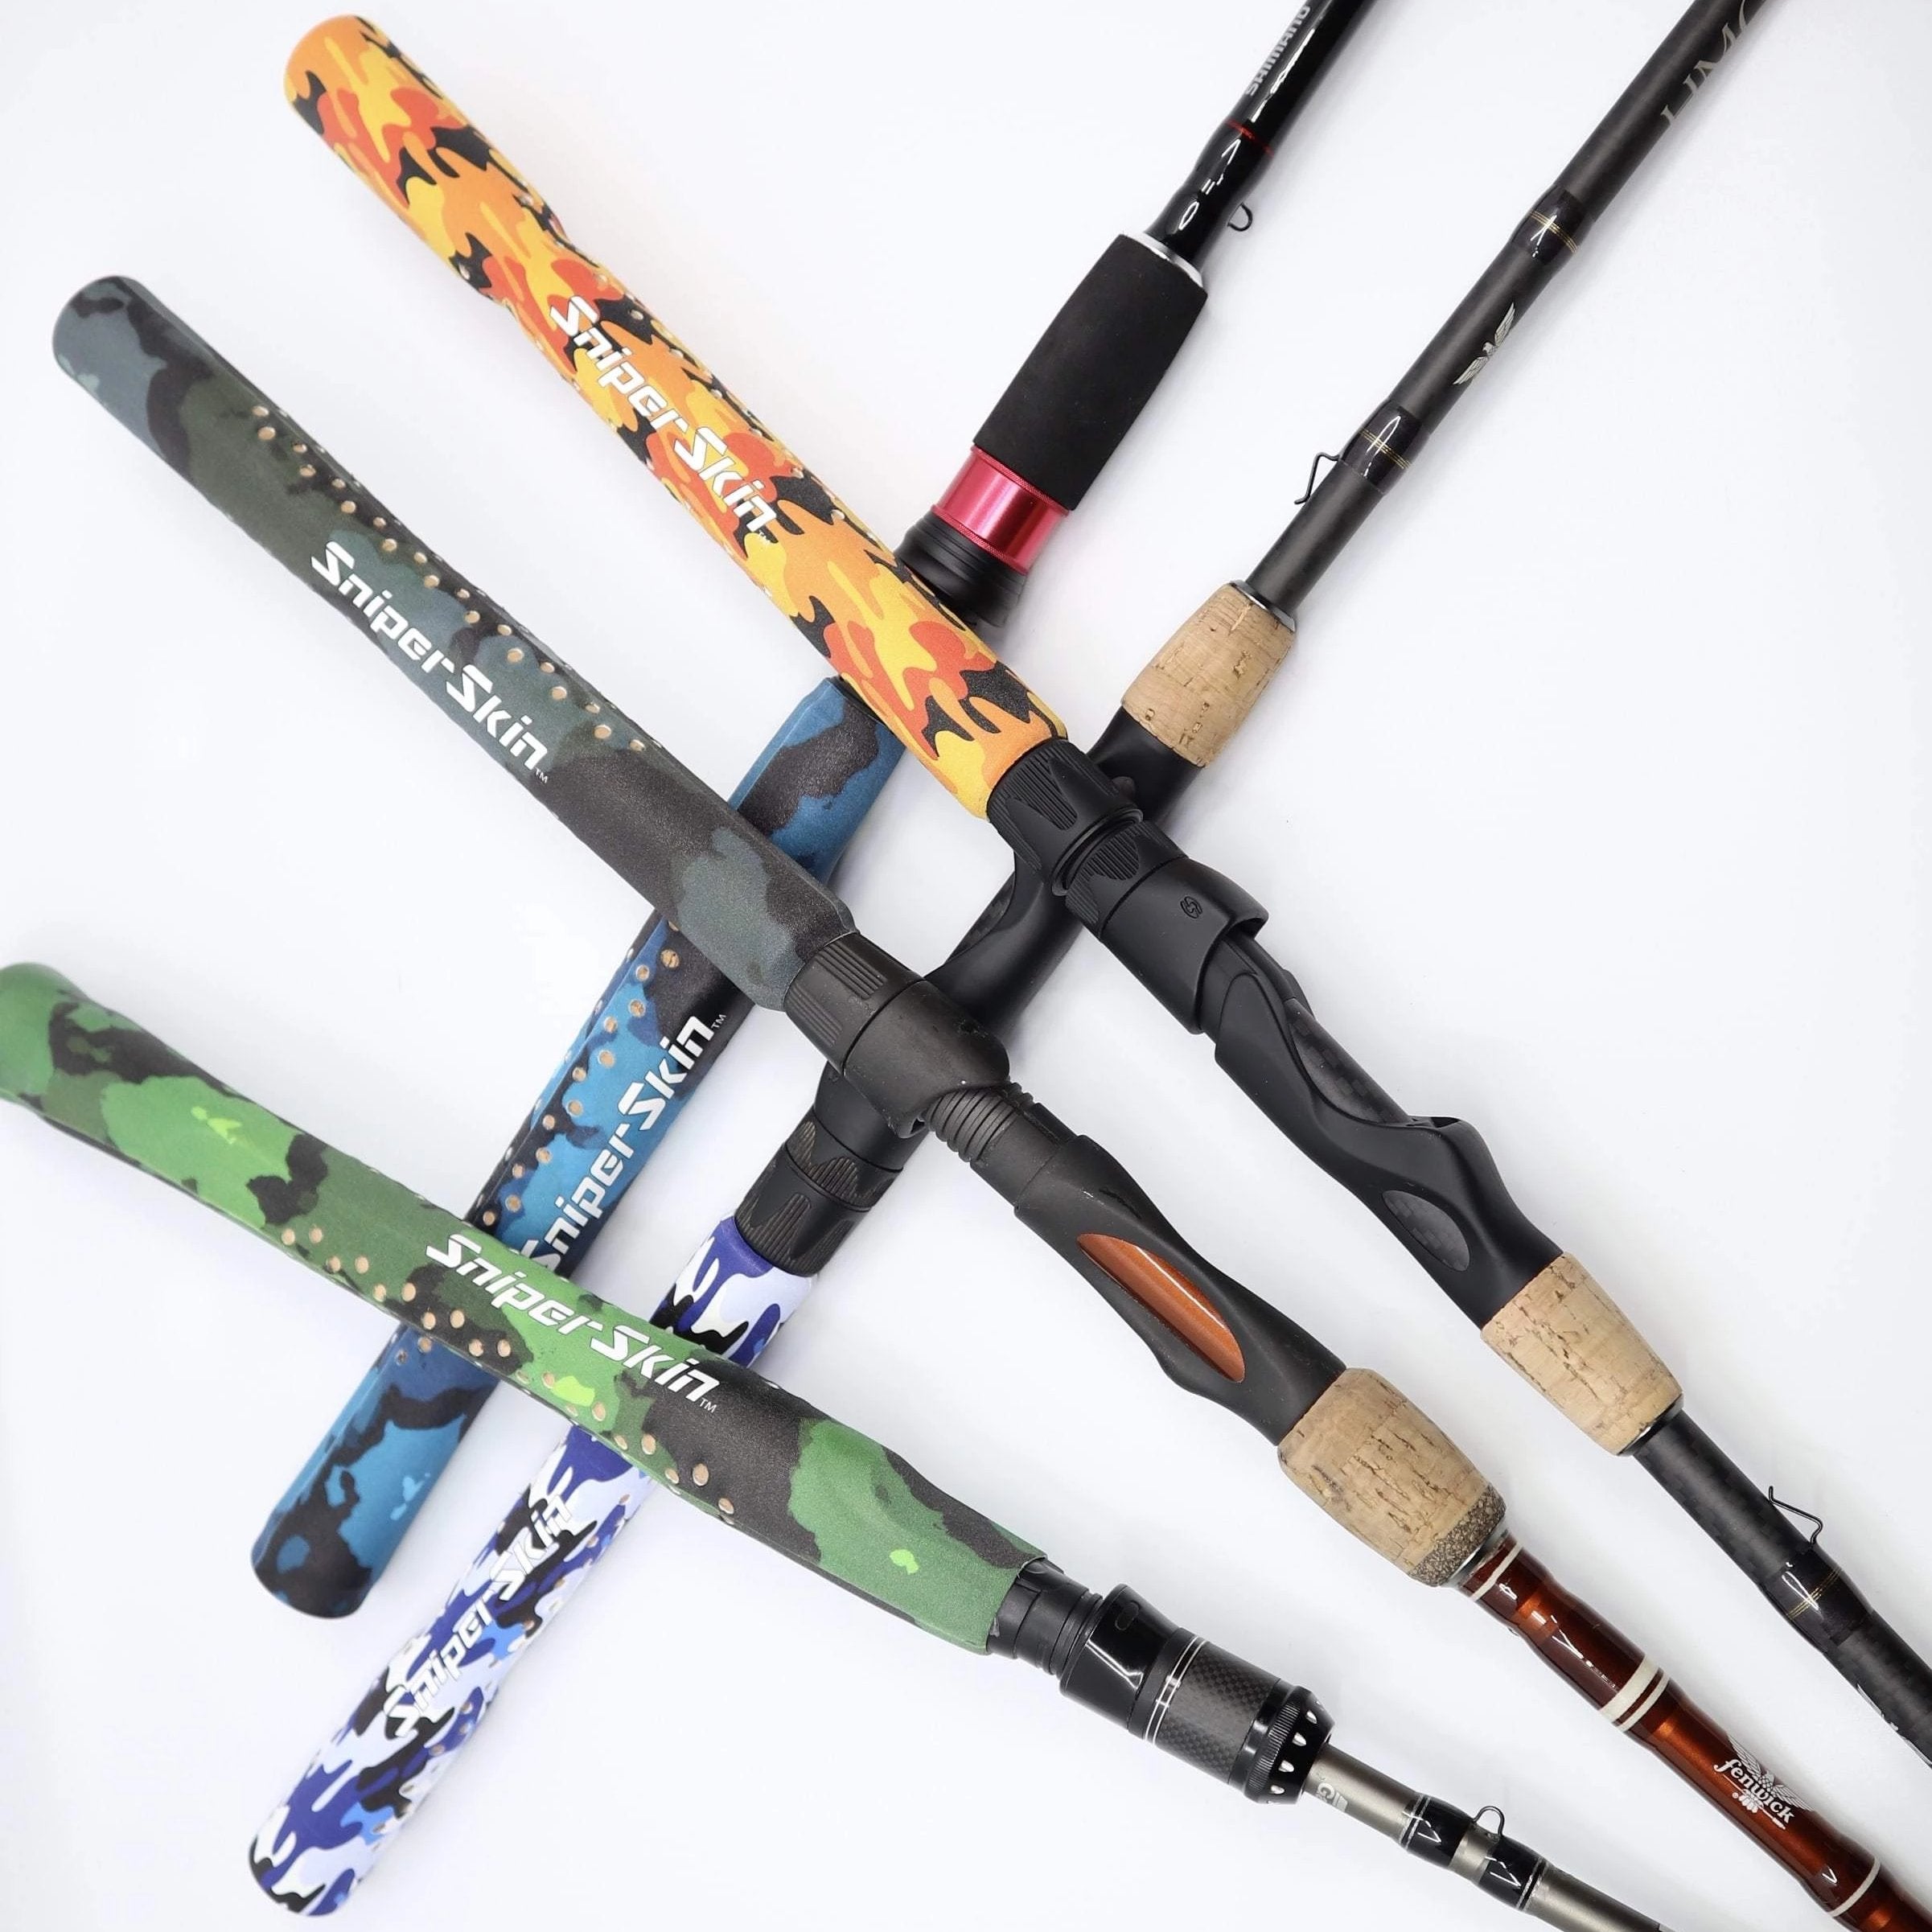 Spectacular Fishing Grips – Sniper Skin Sports